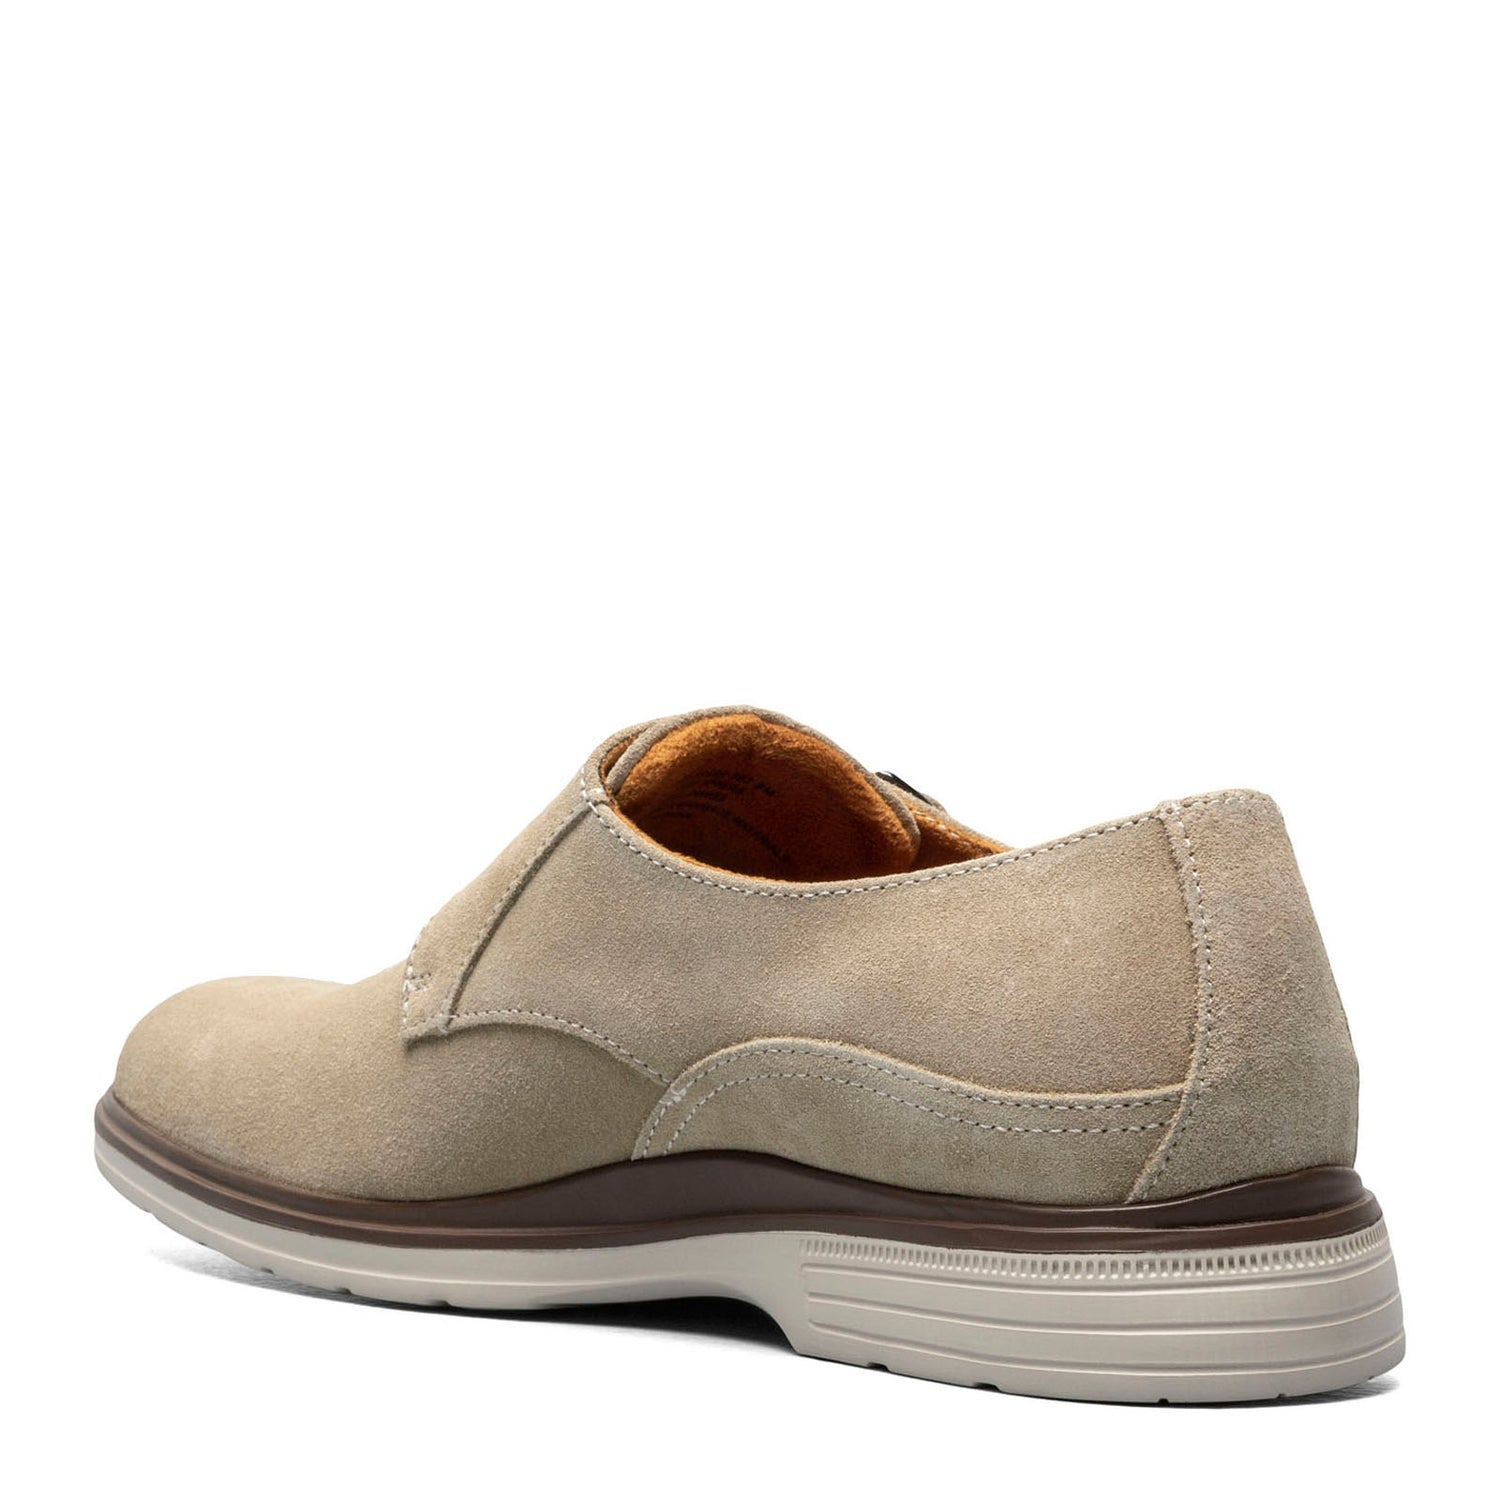 Peltz Shoes  Men's Stacy Adams Taylen Monk Strap SANDSTONE 25589-283